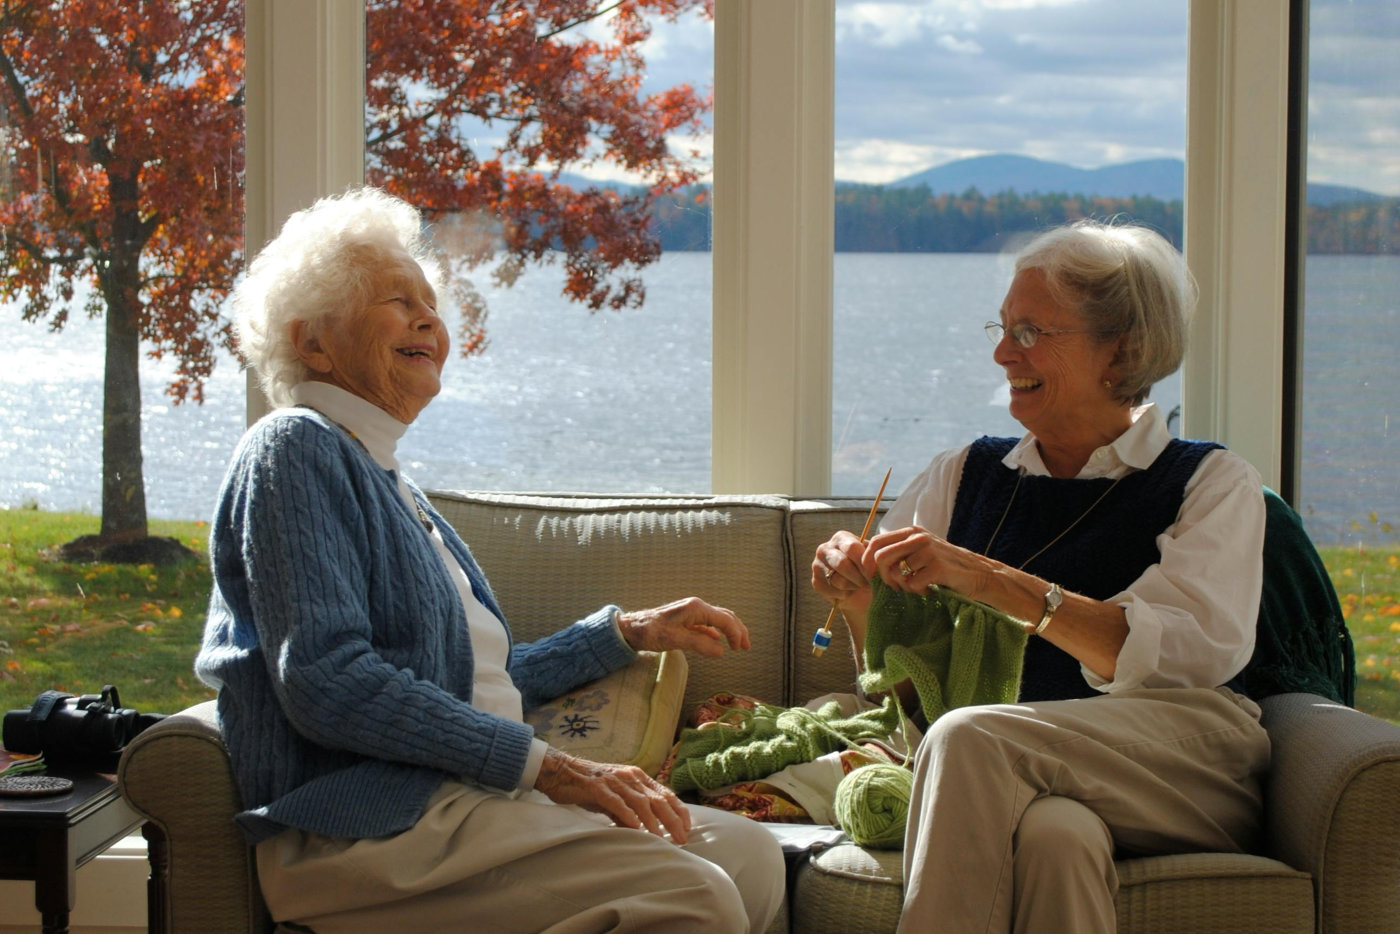 Elderly Woman Sitting on Sofa While Having a Conversation